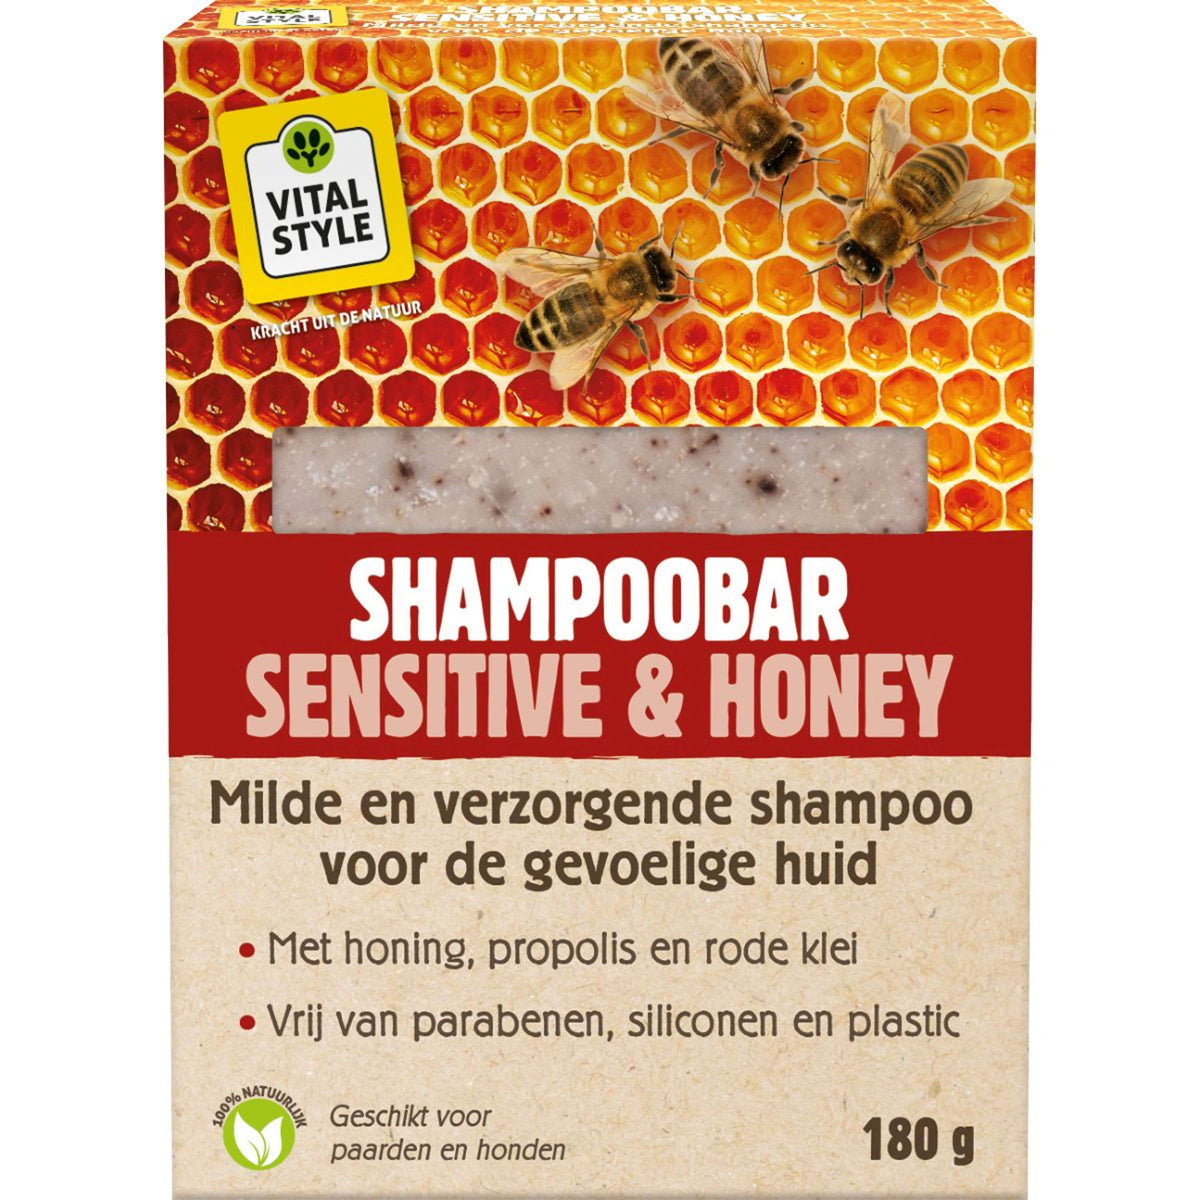 VITALstyle Shampoo Block Sensitive & Honey